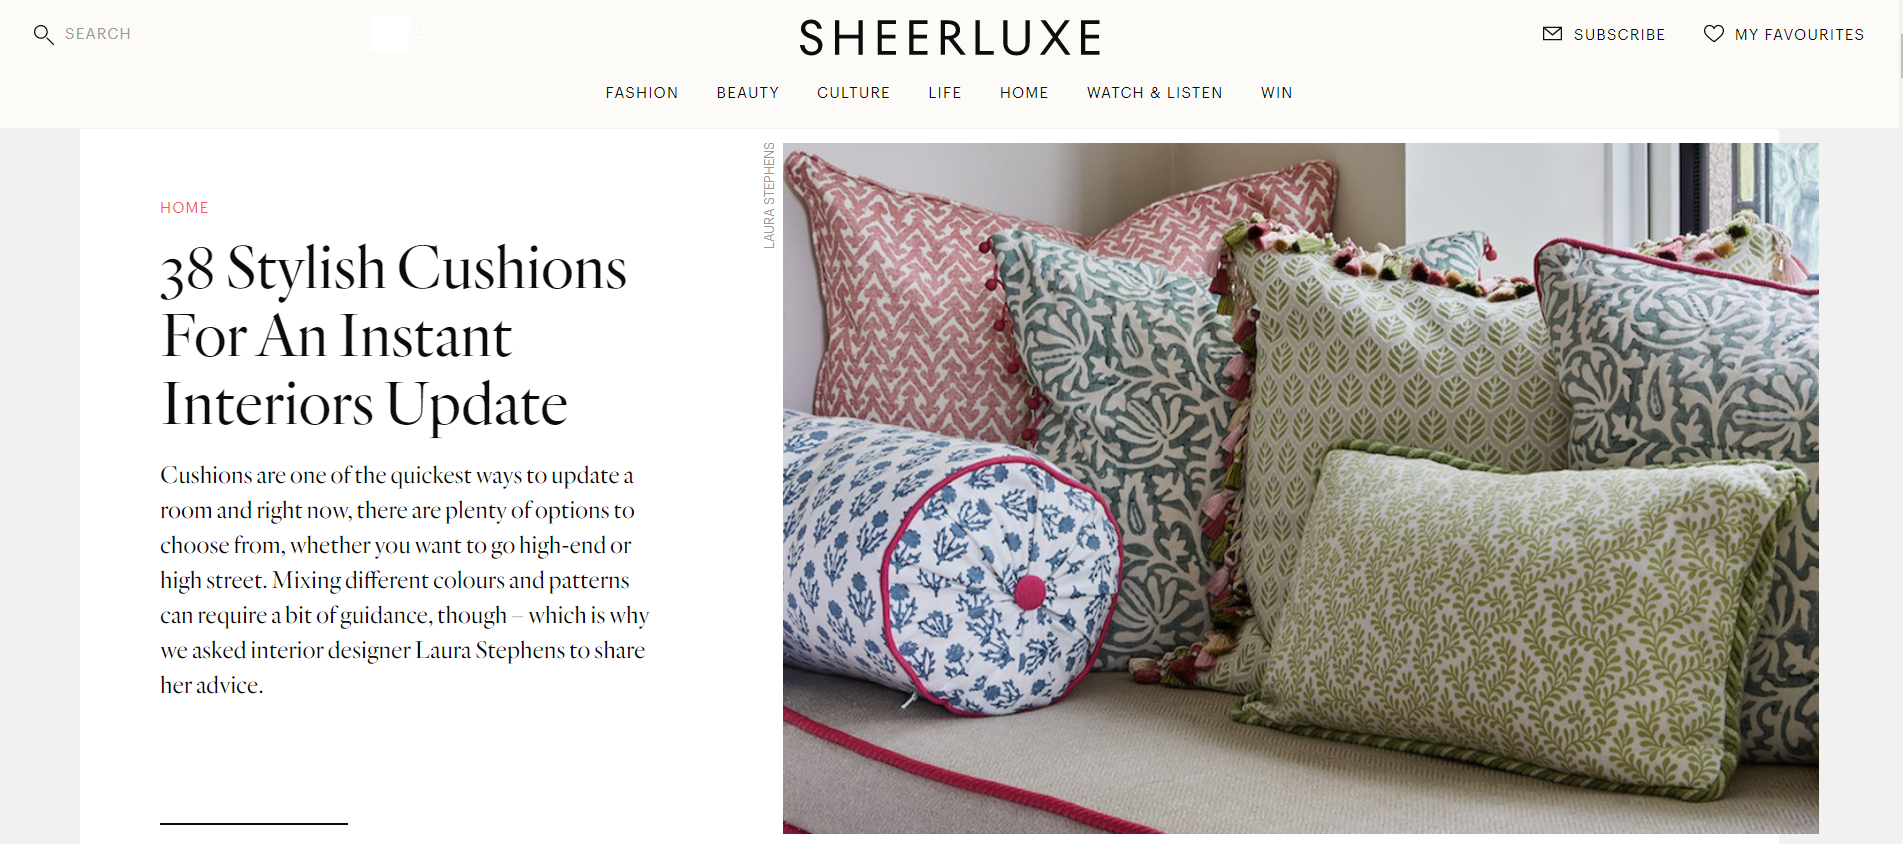 Sheerluxe - Stylish Cushions - 4 November 2021